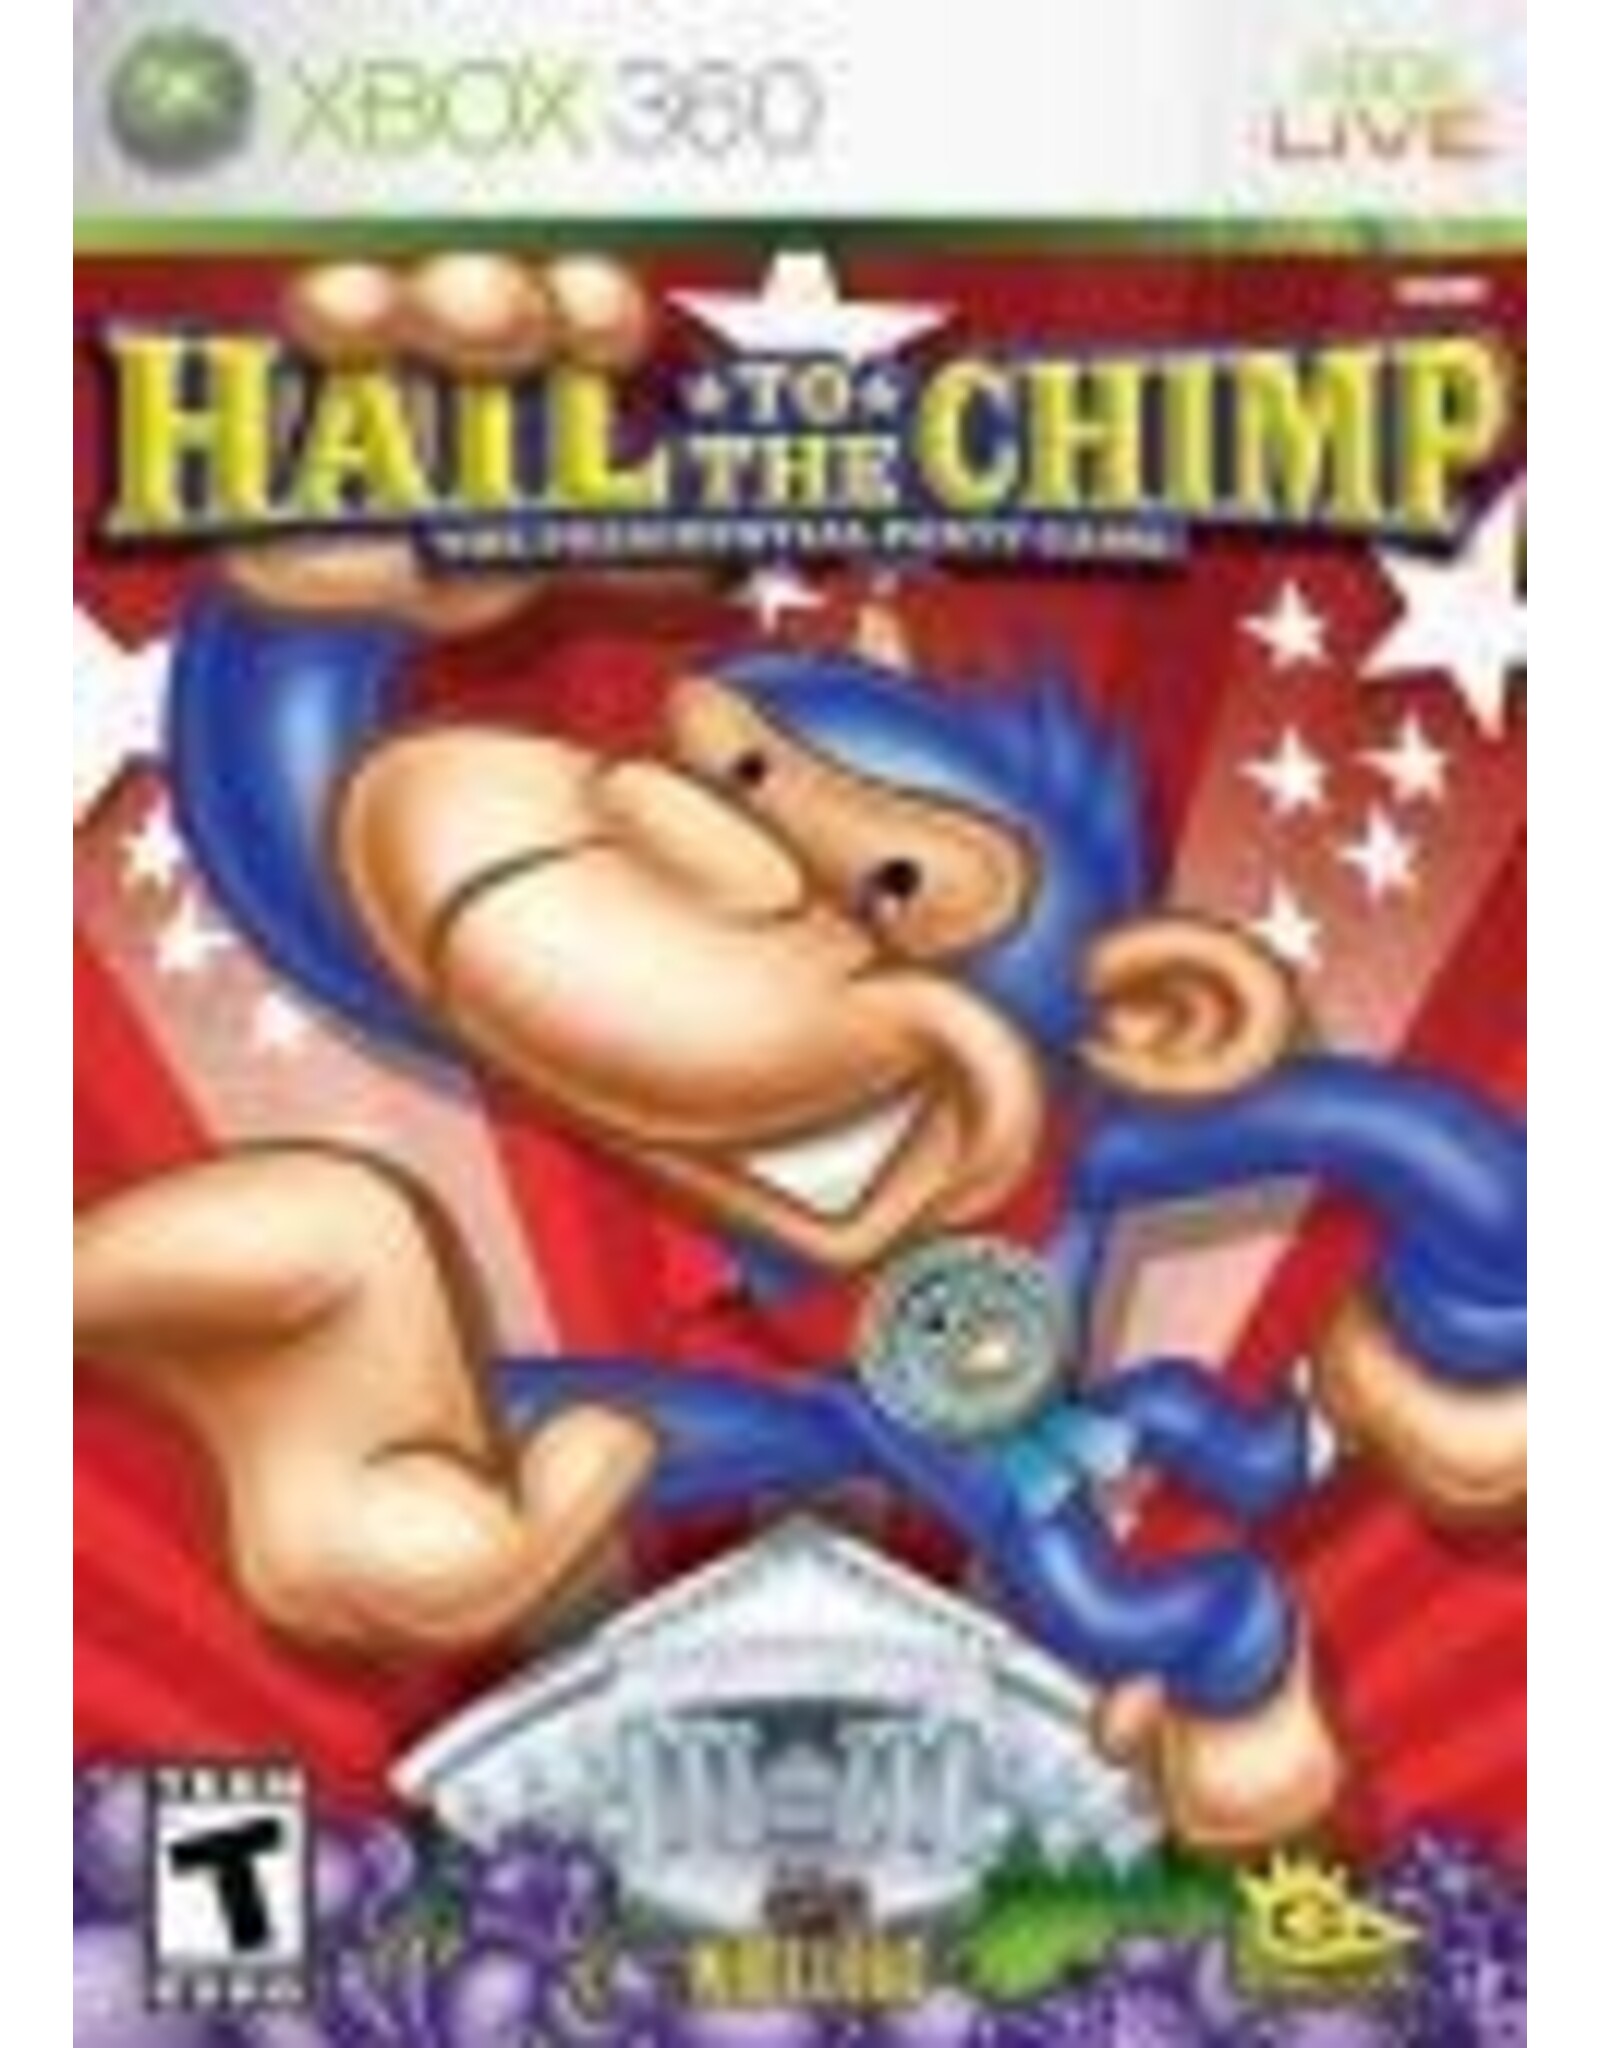 Xbox 360 Hail to the Chimp (CiB)